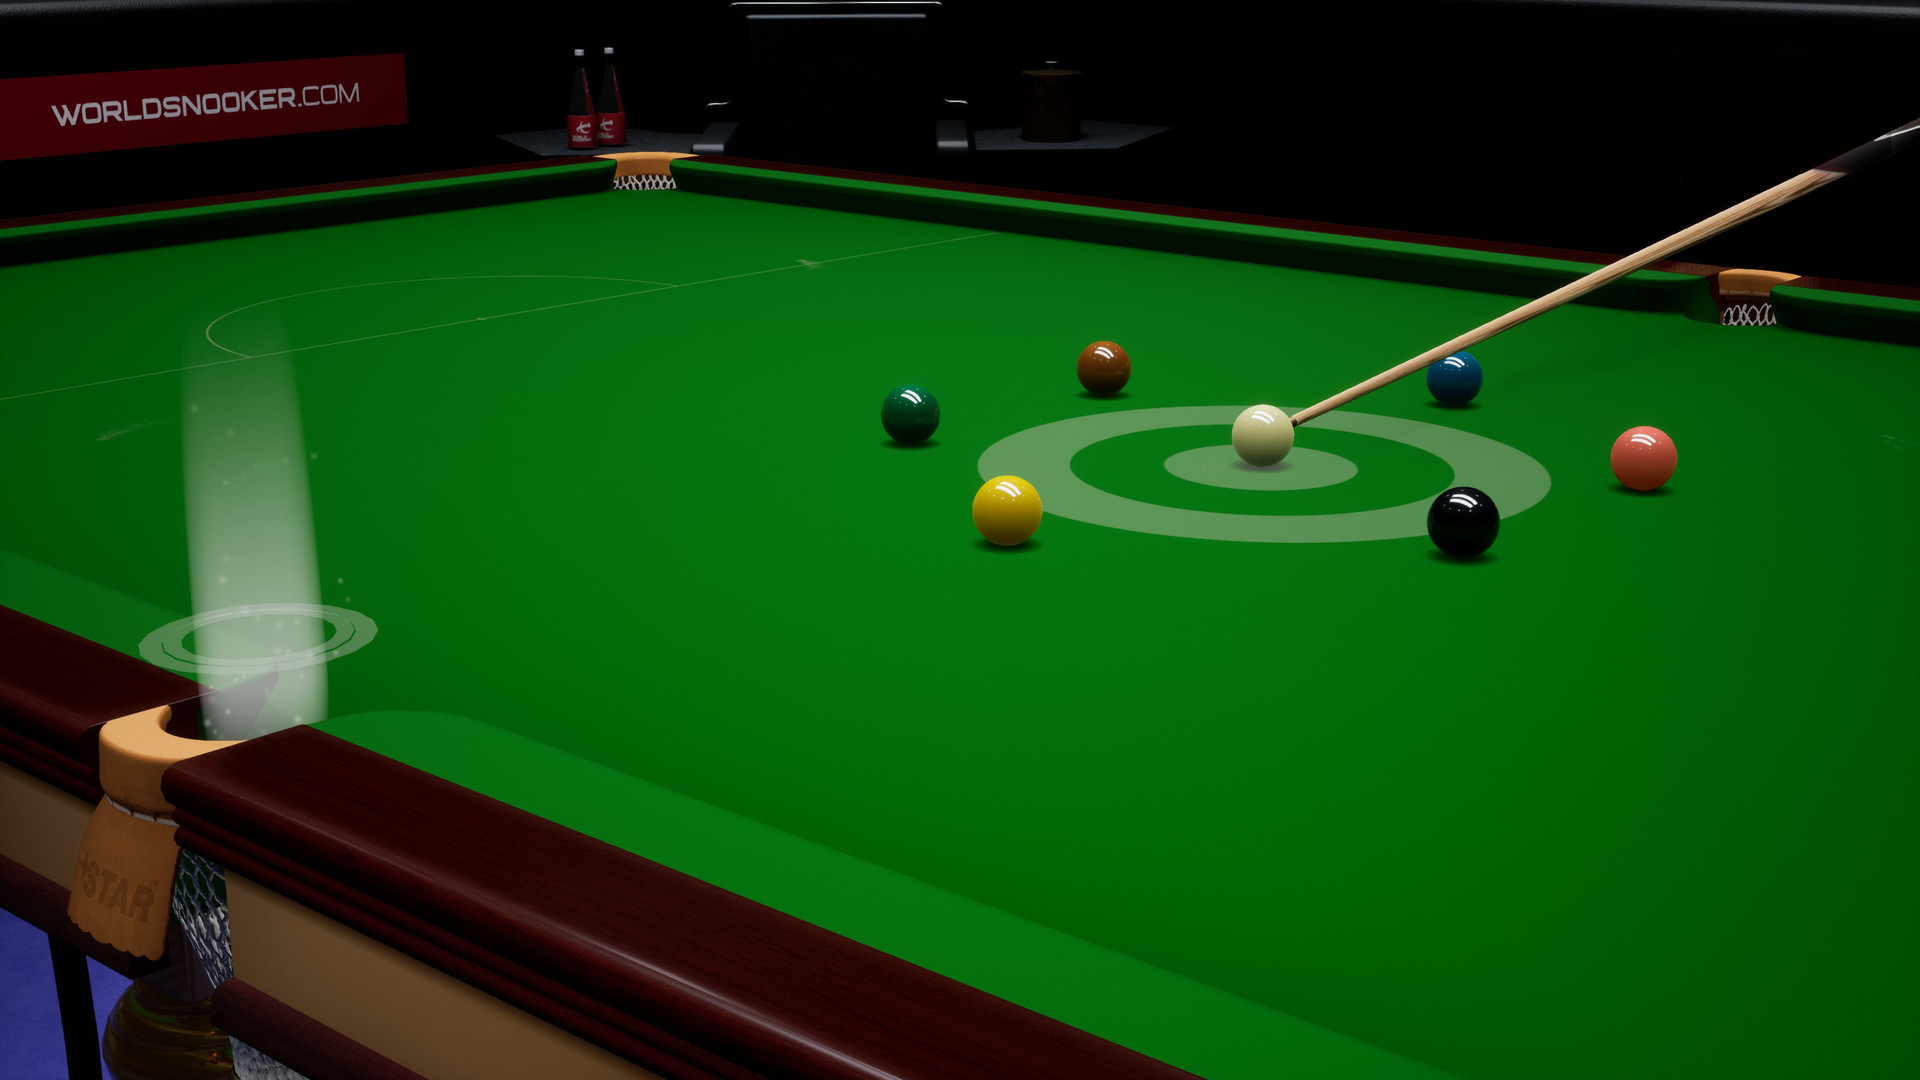 Snooker 19 Challenge Pack Featured Screenshot #1